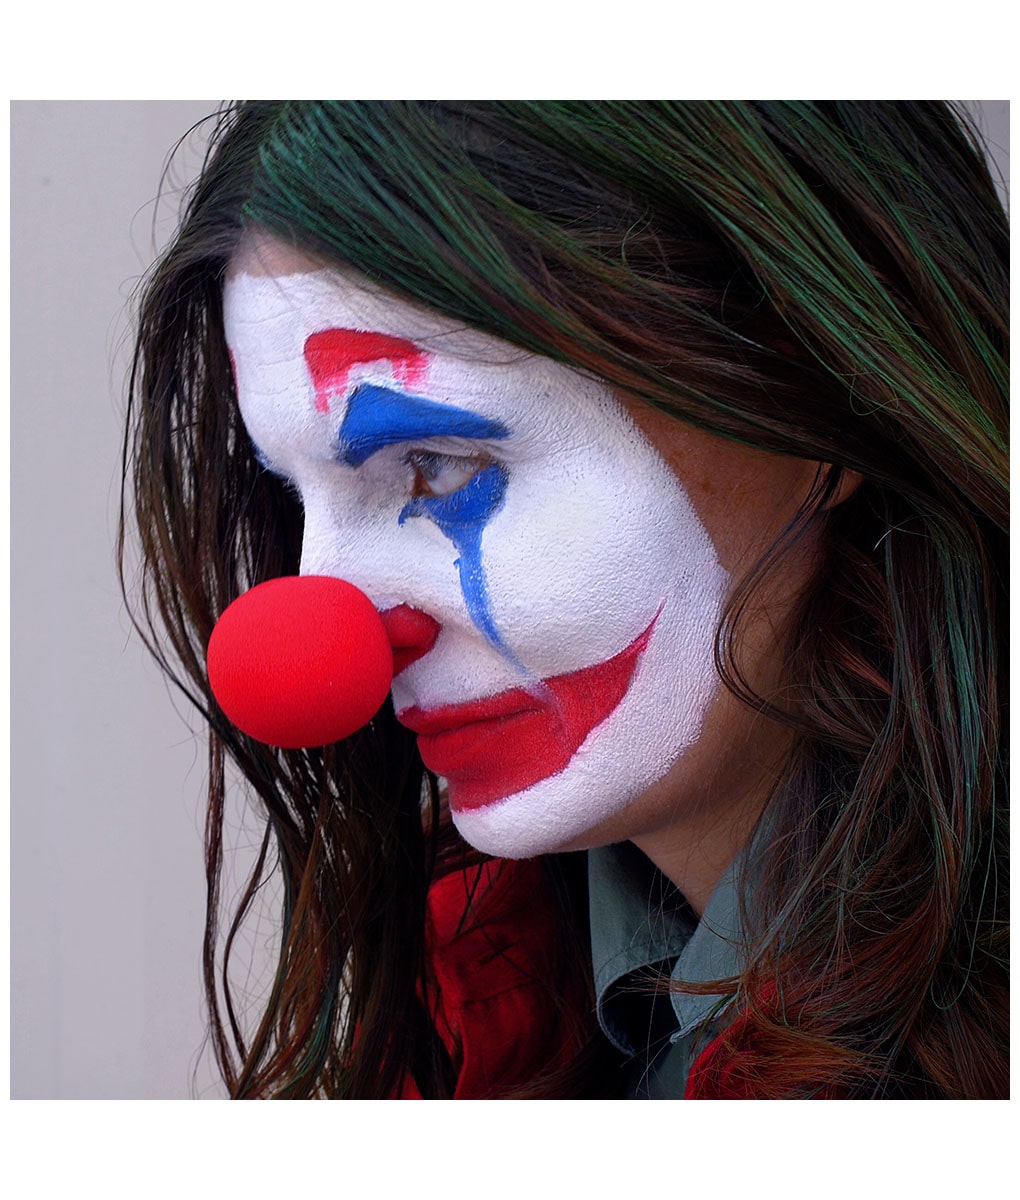 Deluxe Chaos Clown Kit – Graftobian Make-Up Company